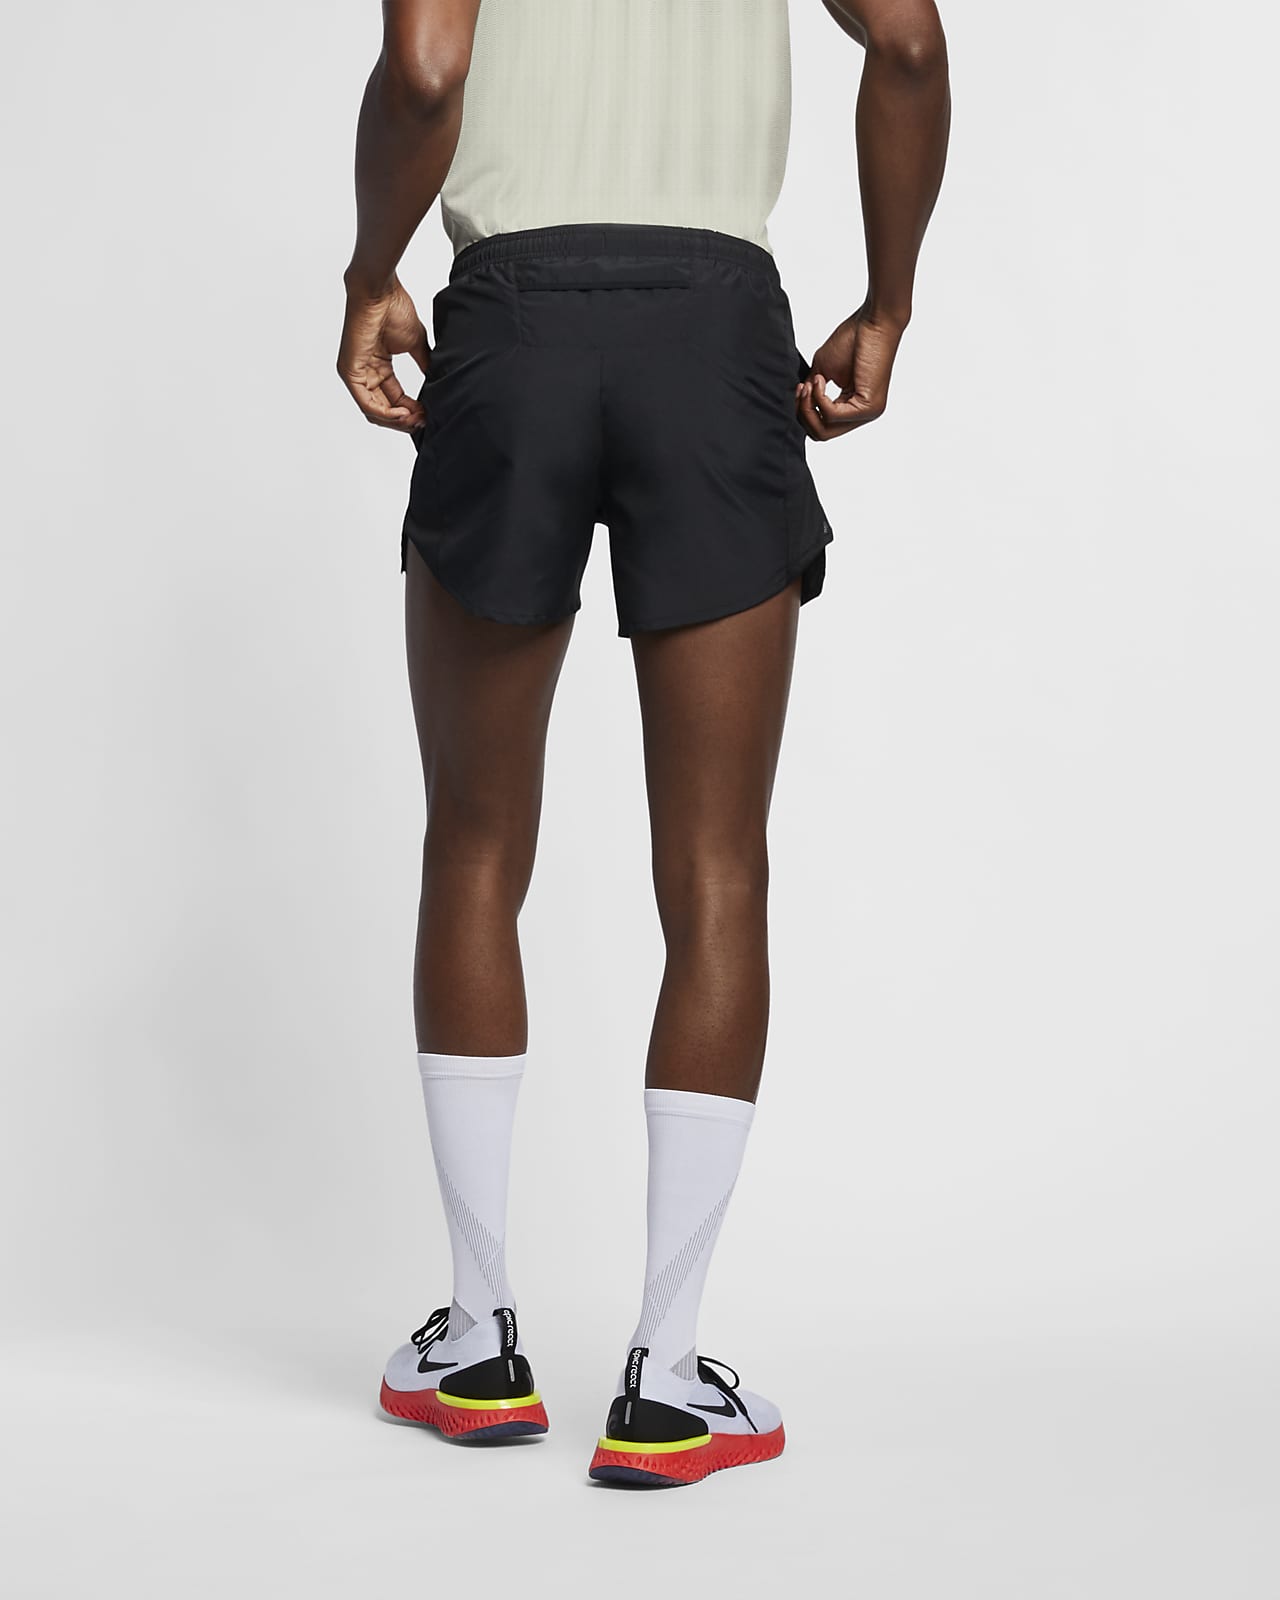 Nike公式 ナイキ チャレンジャー メンズ ランニングショートパンツ オンラインストア 通販サイト